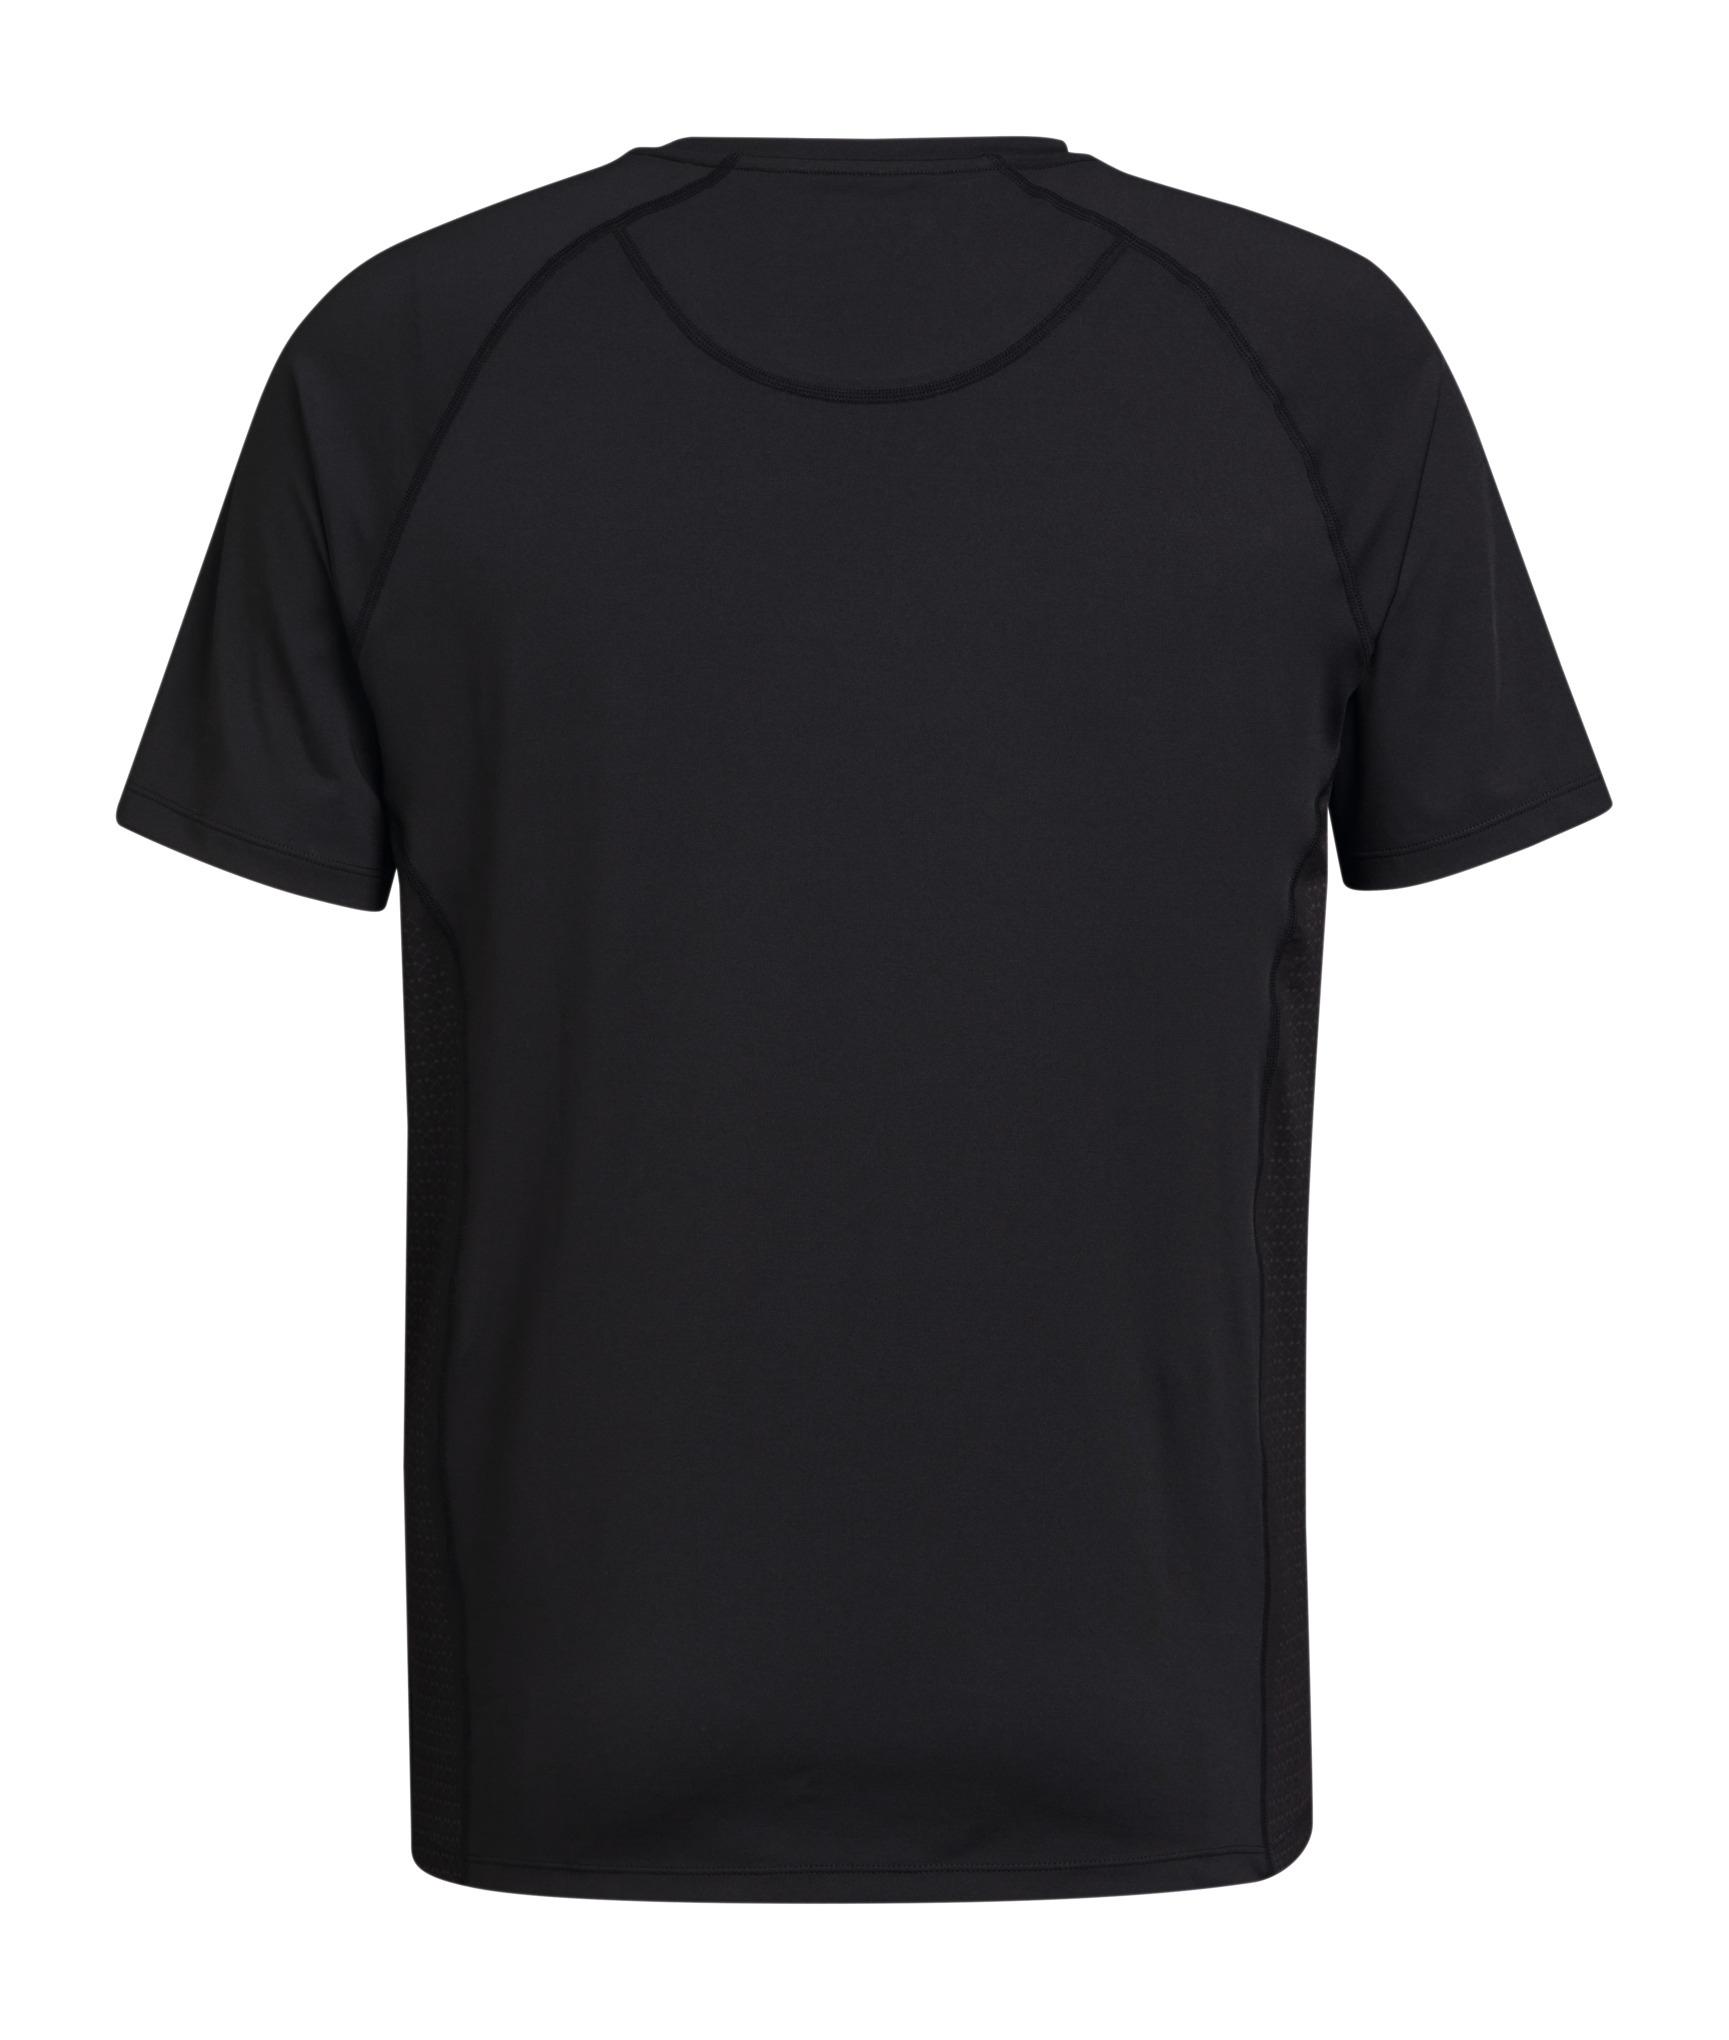 STIHL TIMBERSPORTS® SCORE performance shirt - Men